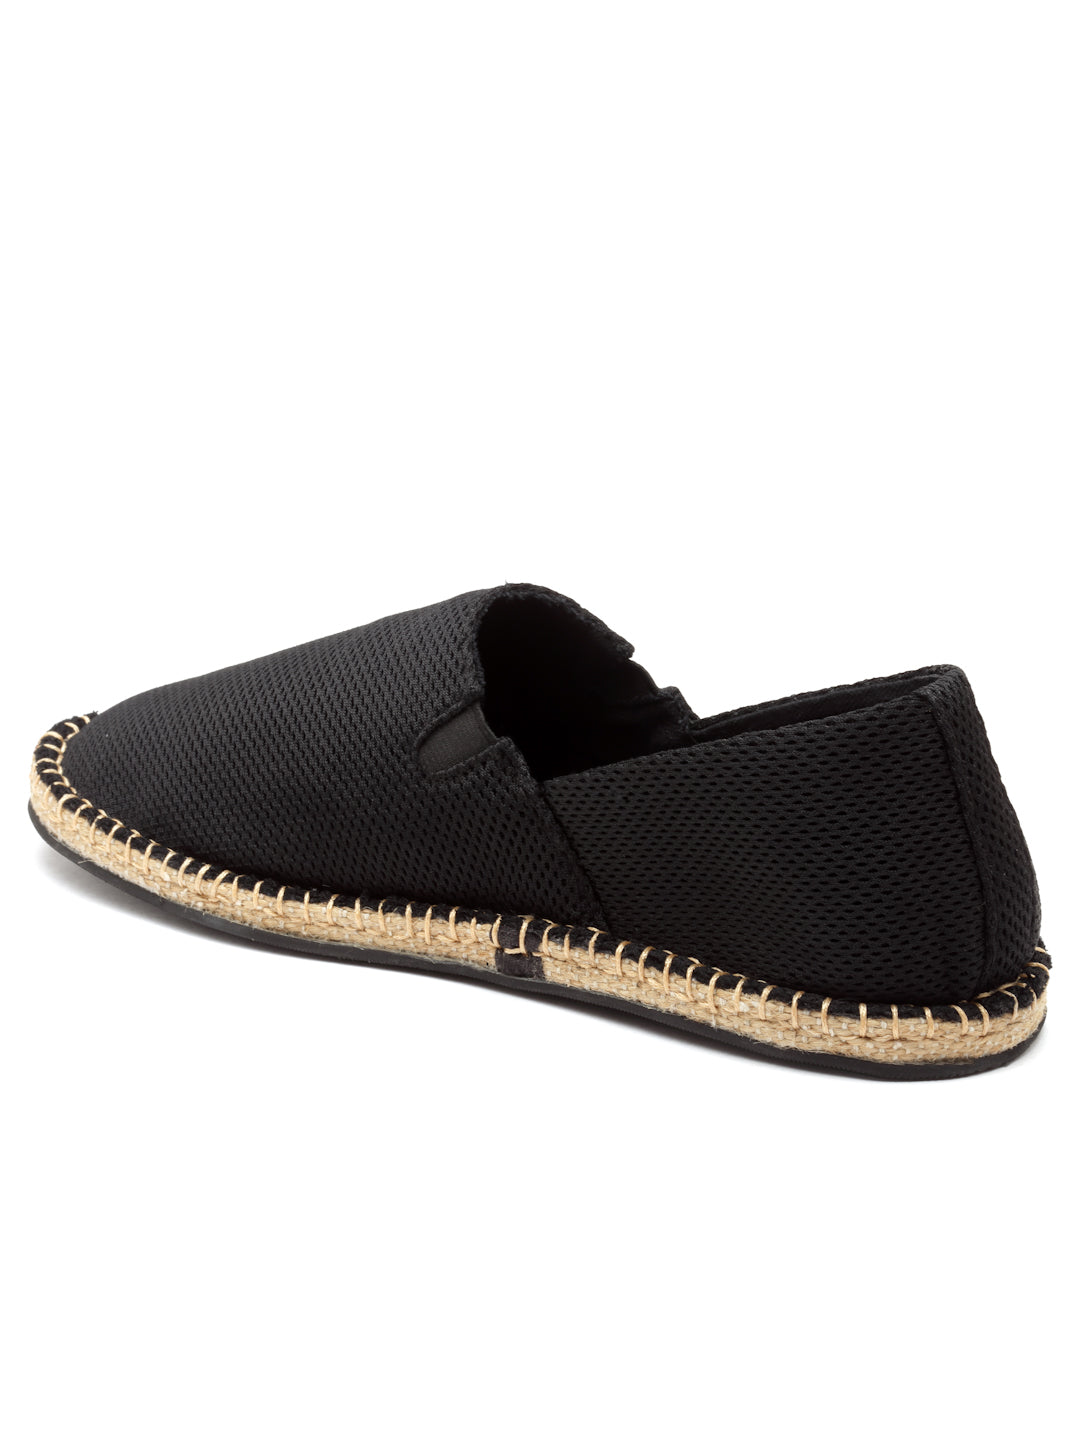 Black Textile Comfortable Slip On Casual Shoes | Espadrilles